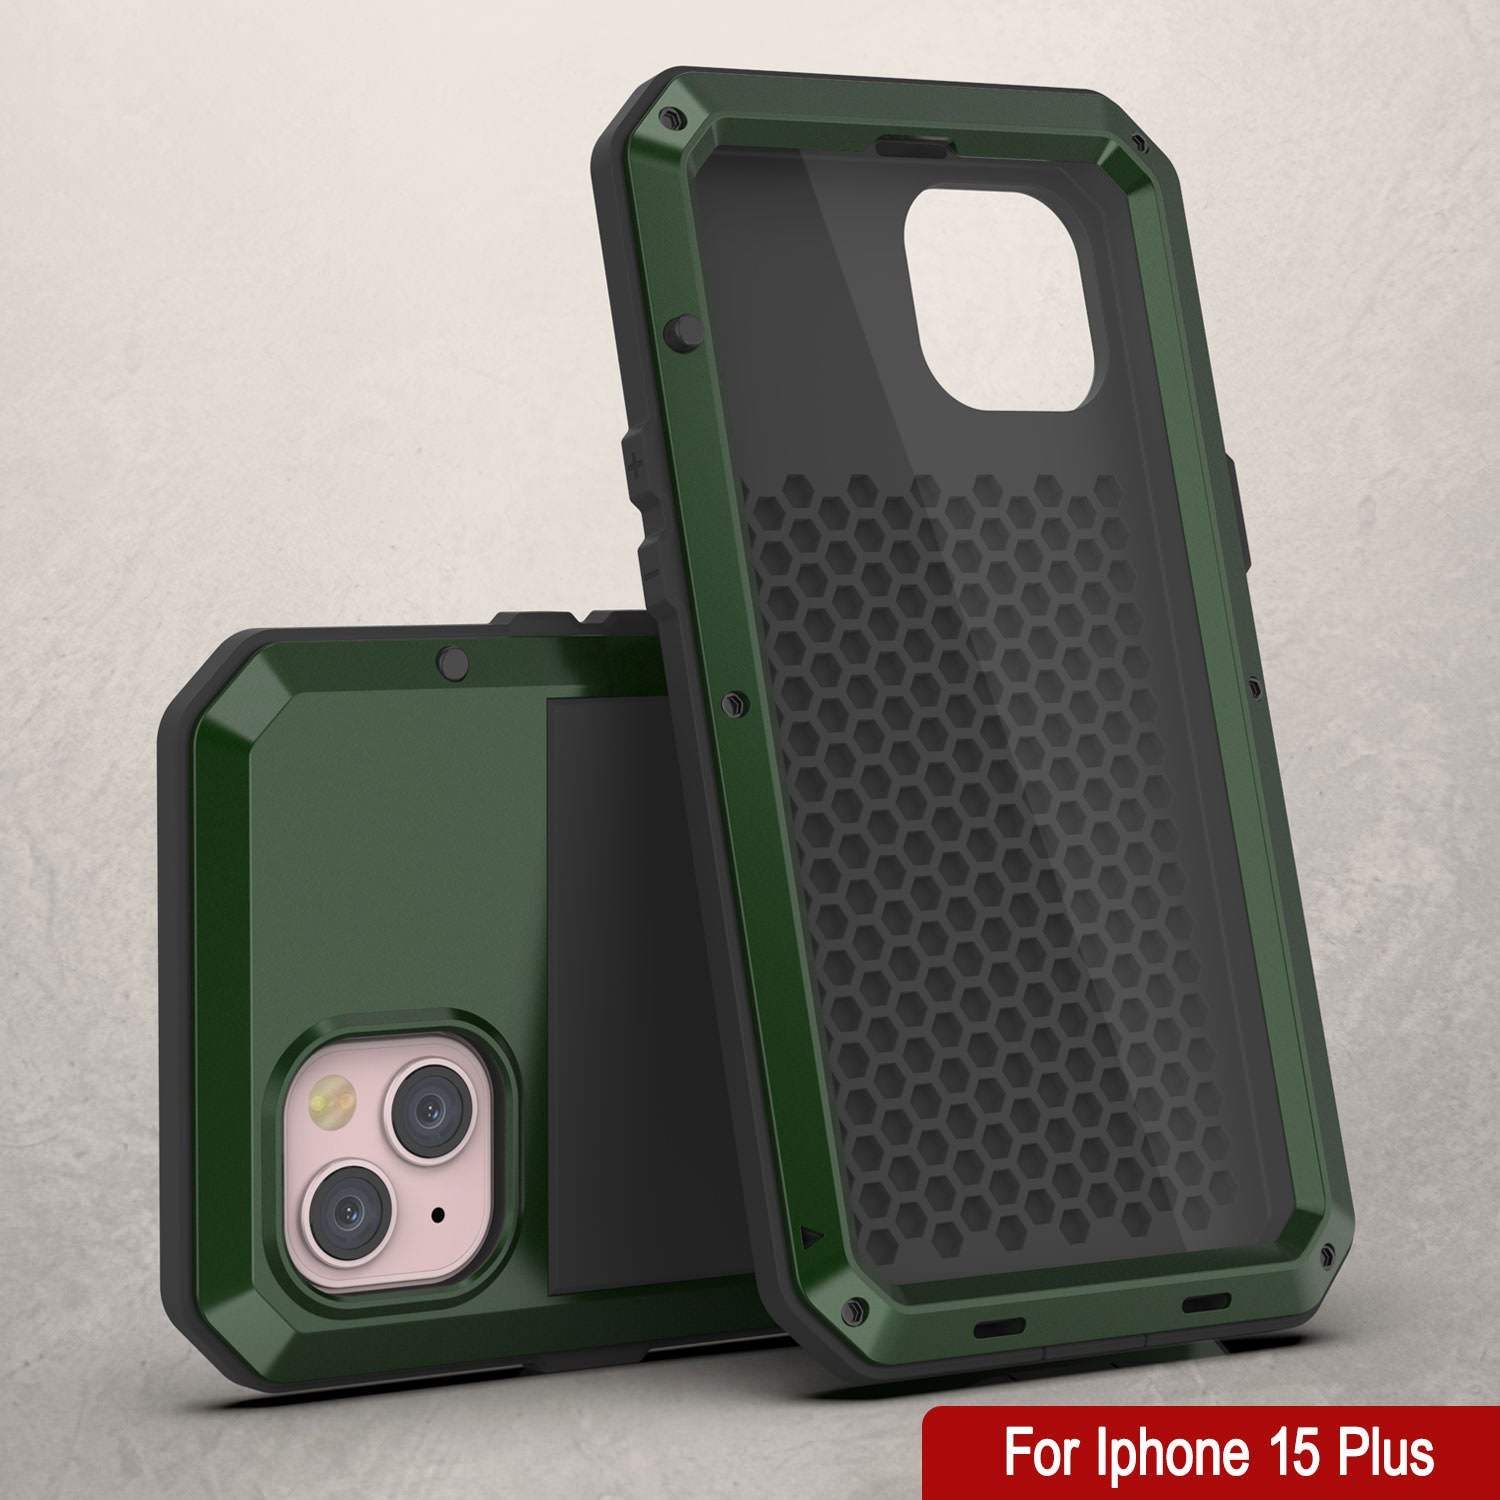 iPhone 15 Plus Metal Case, Heavy Duty Military Grade Armor Cover [shock proof] Full Body Hard [Dark Green]